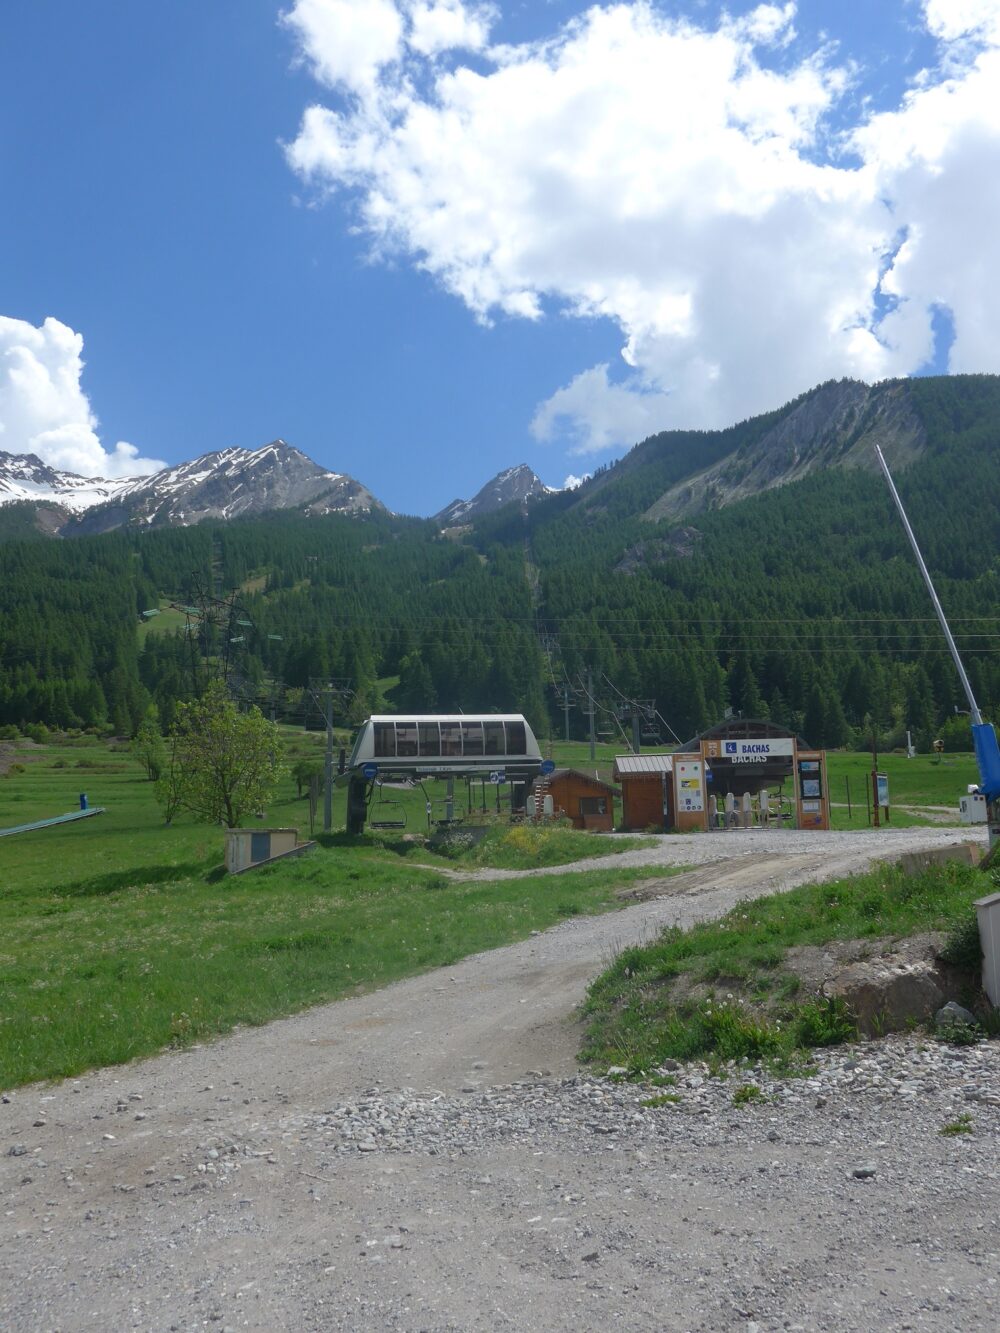 The ski lifts at Serre Chevalier